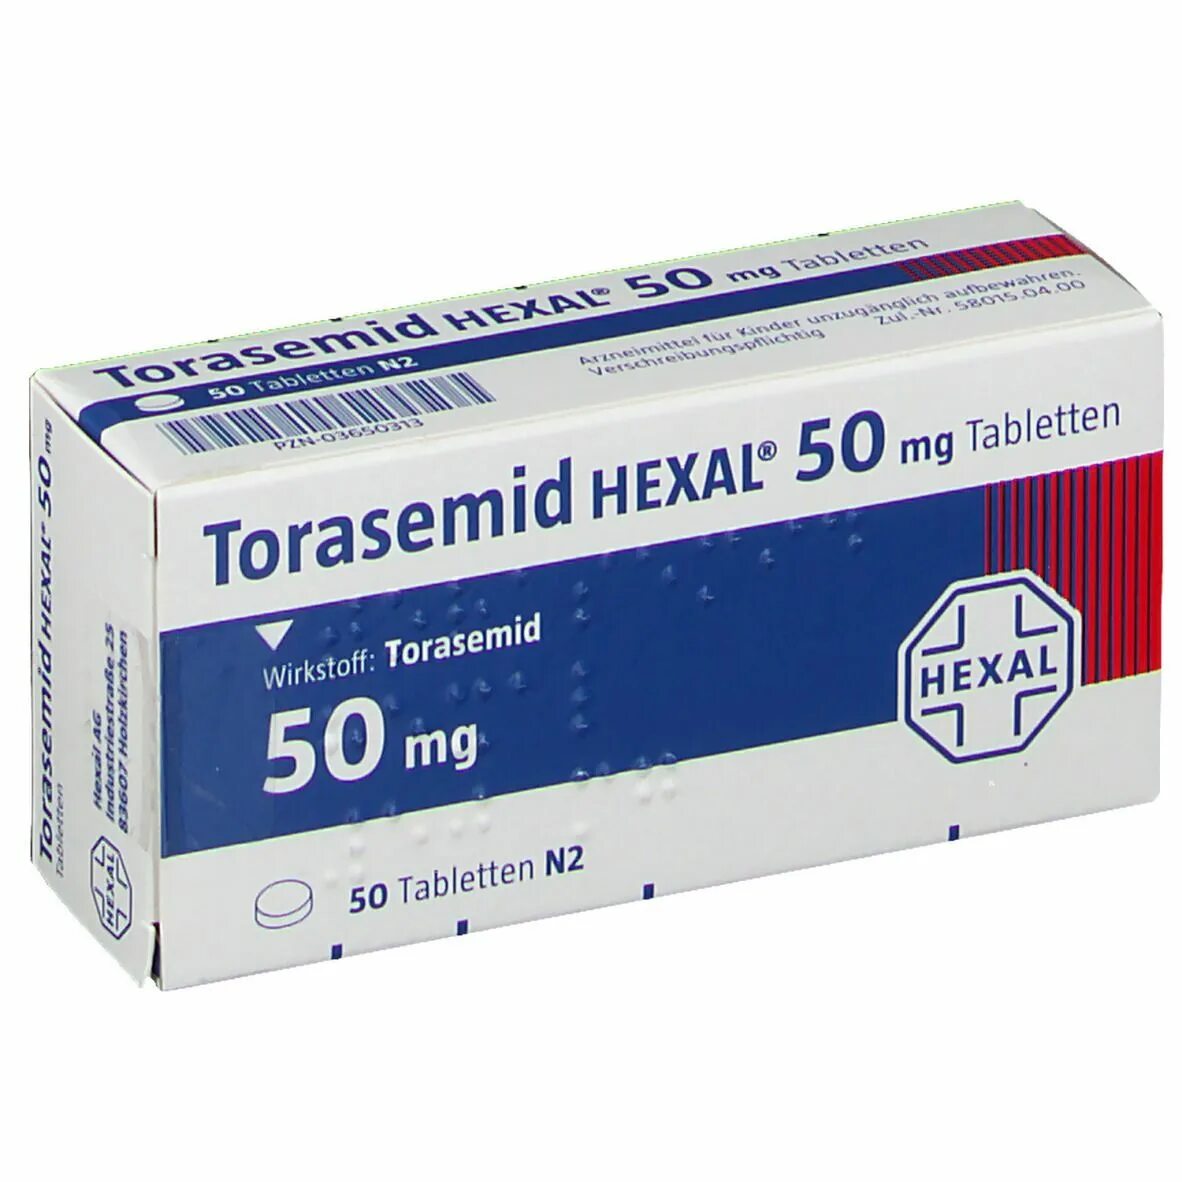 Тамоксифен гексал 20мг. Tamoxifen Hexal Германия 20мг. Тамоксифен 20 мг. Тамоксифен гексал 20.